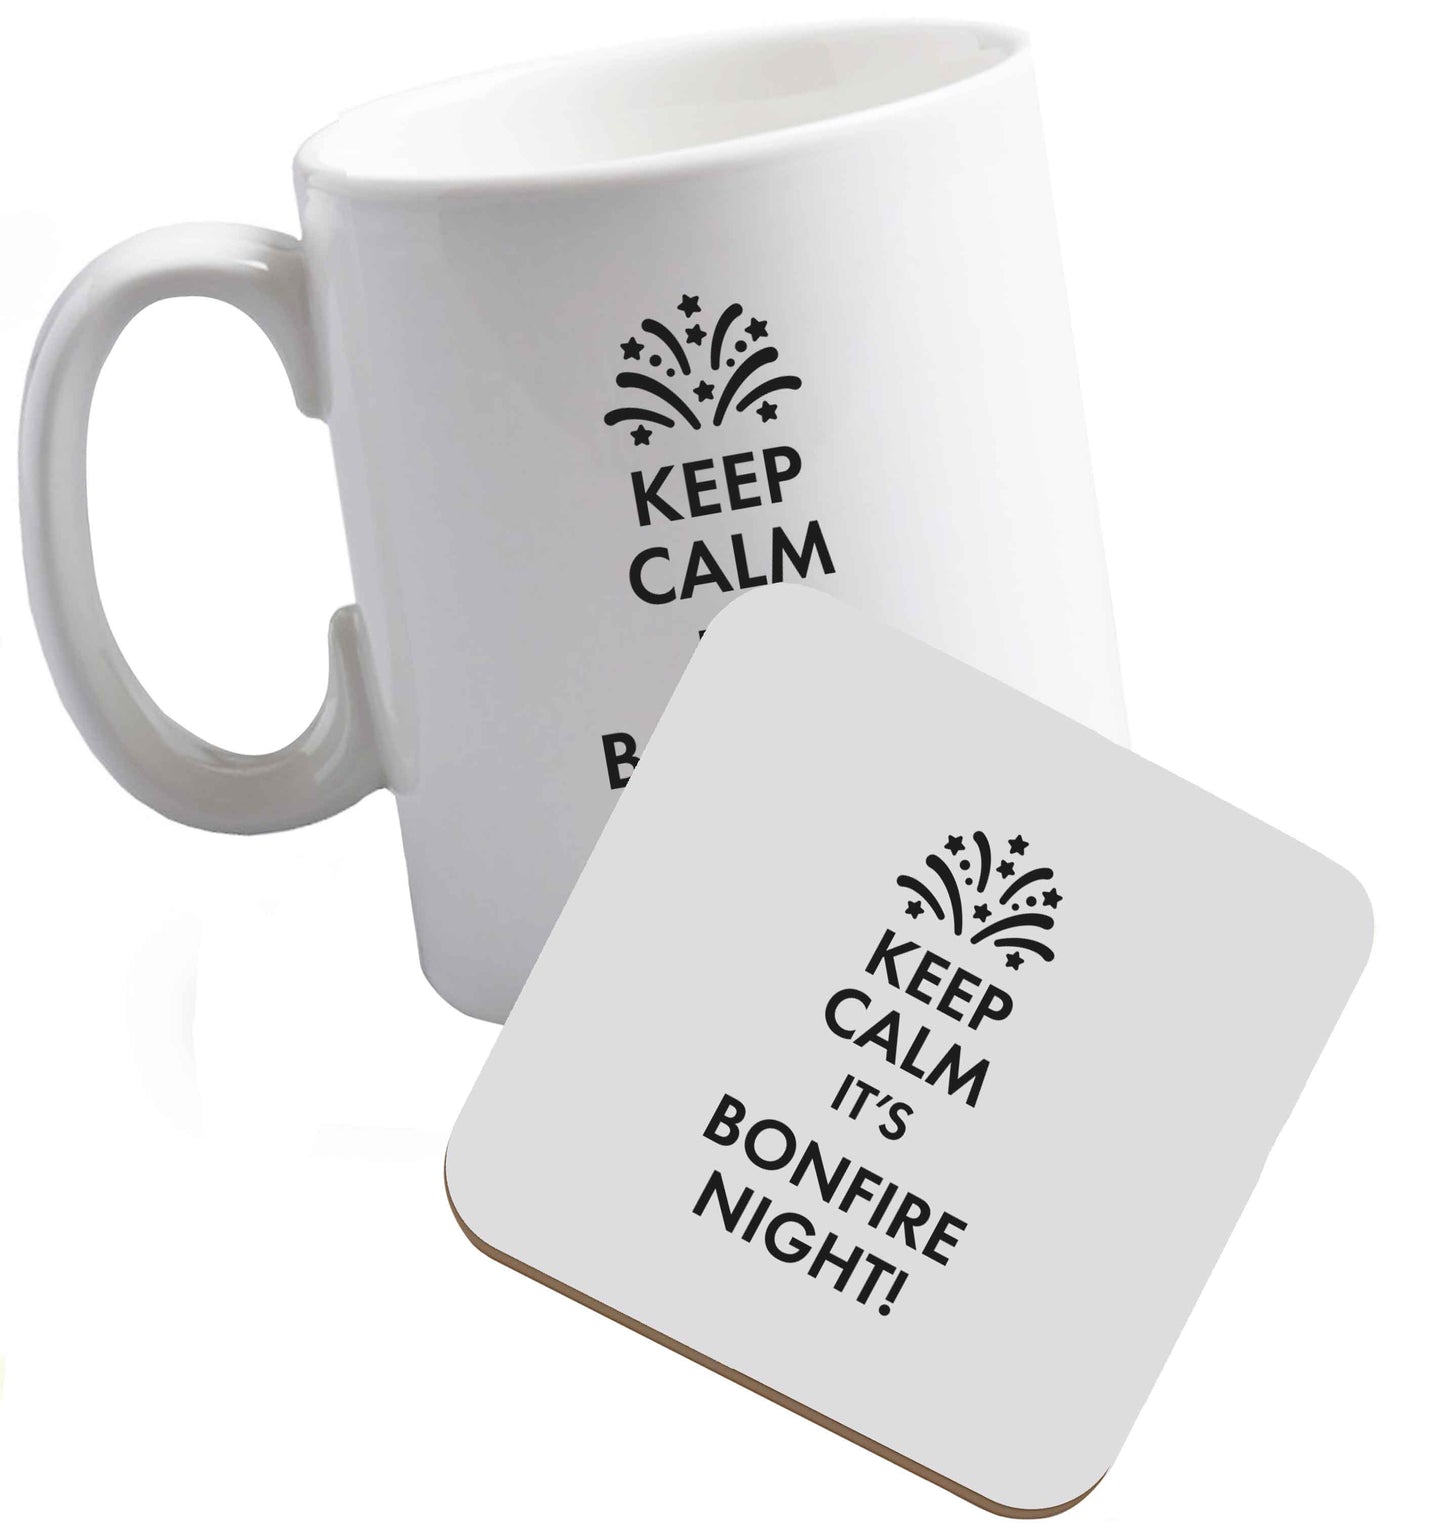 10 oz Keep calm its bonfire night ceramic mug and coaster set right handed